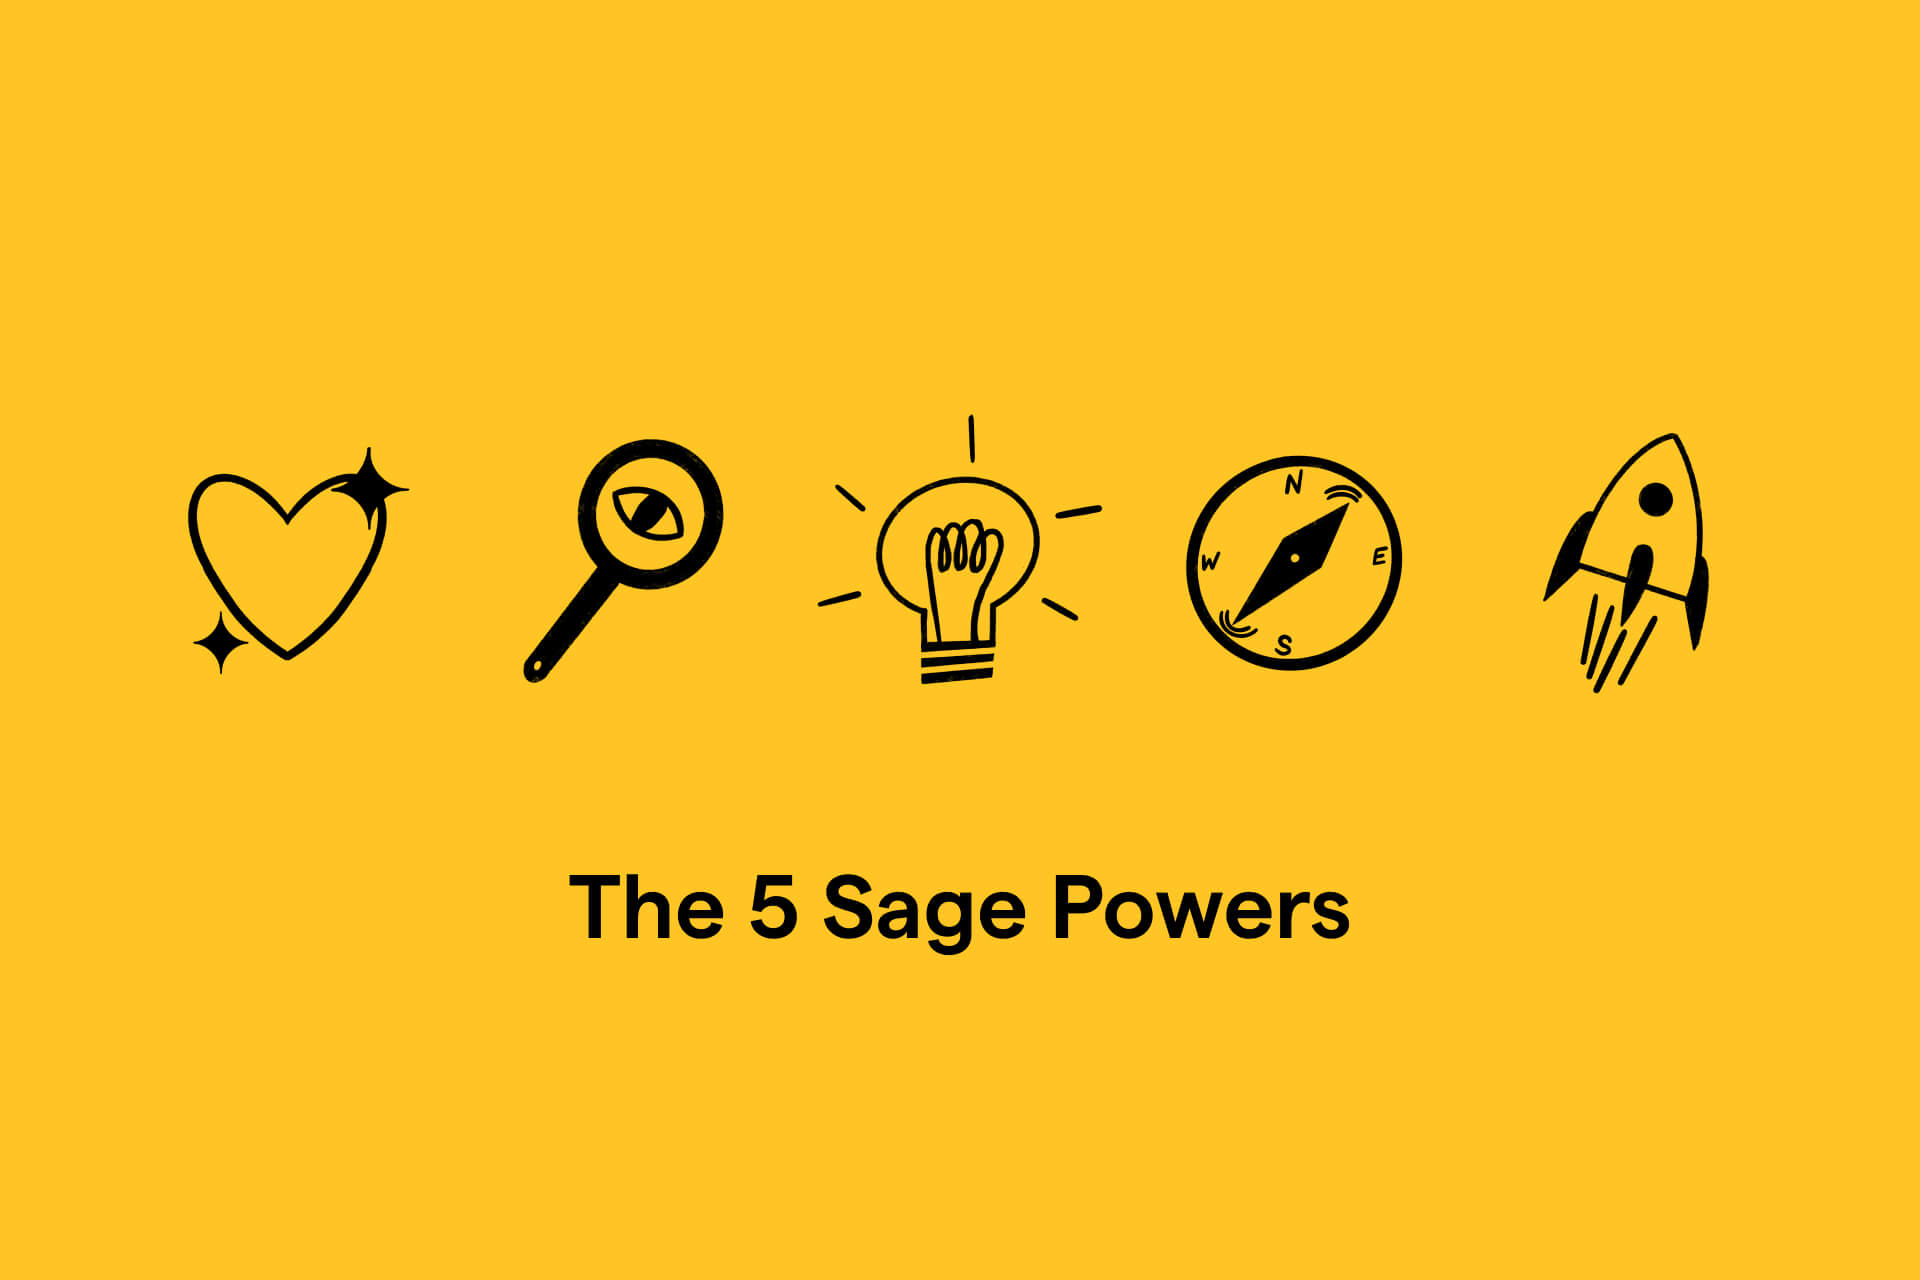 The 5 Sage Powers